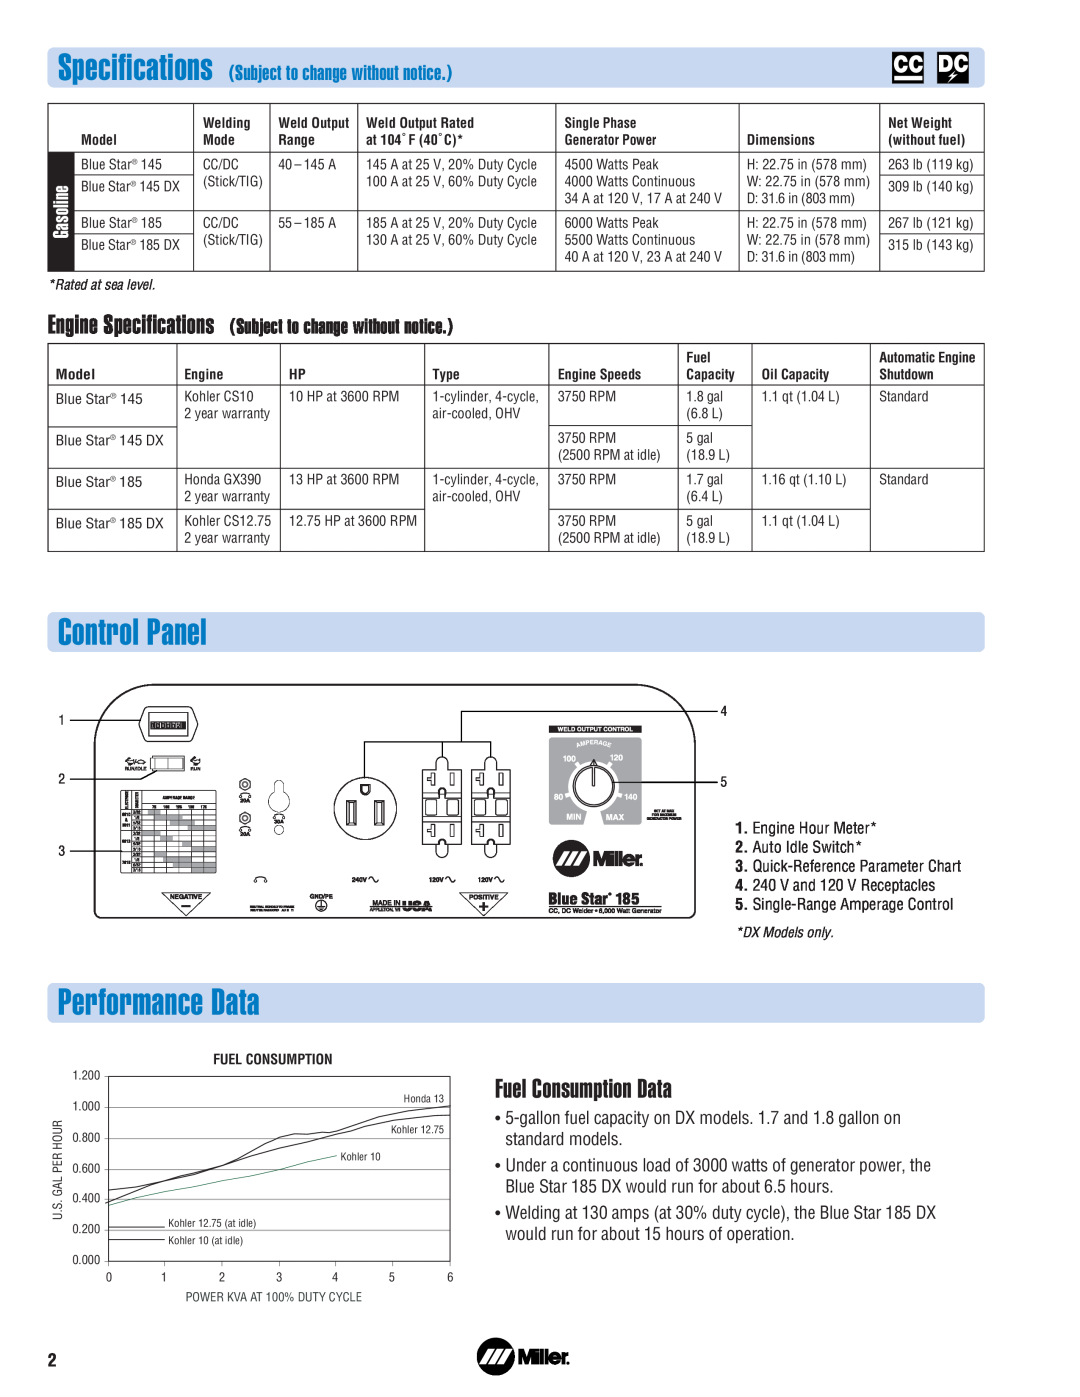 Miller Electric 145 DX manual Control Panel, Performance Data, Fuel Consumption Data 